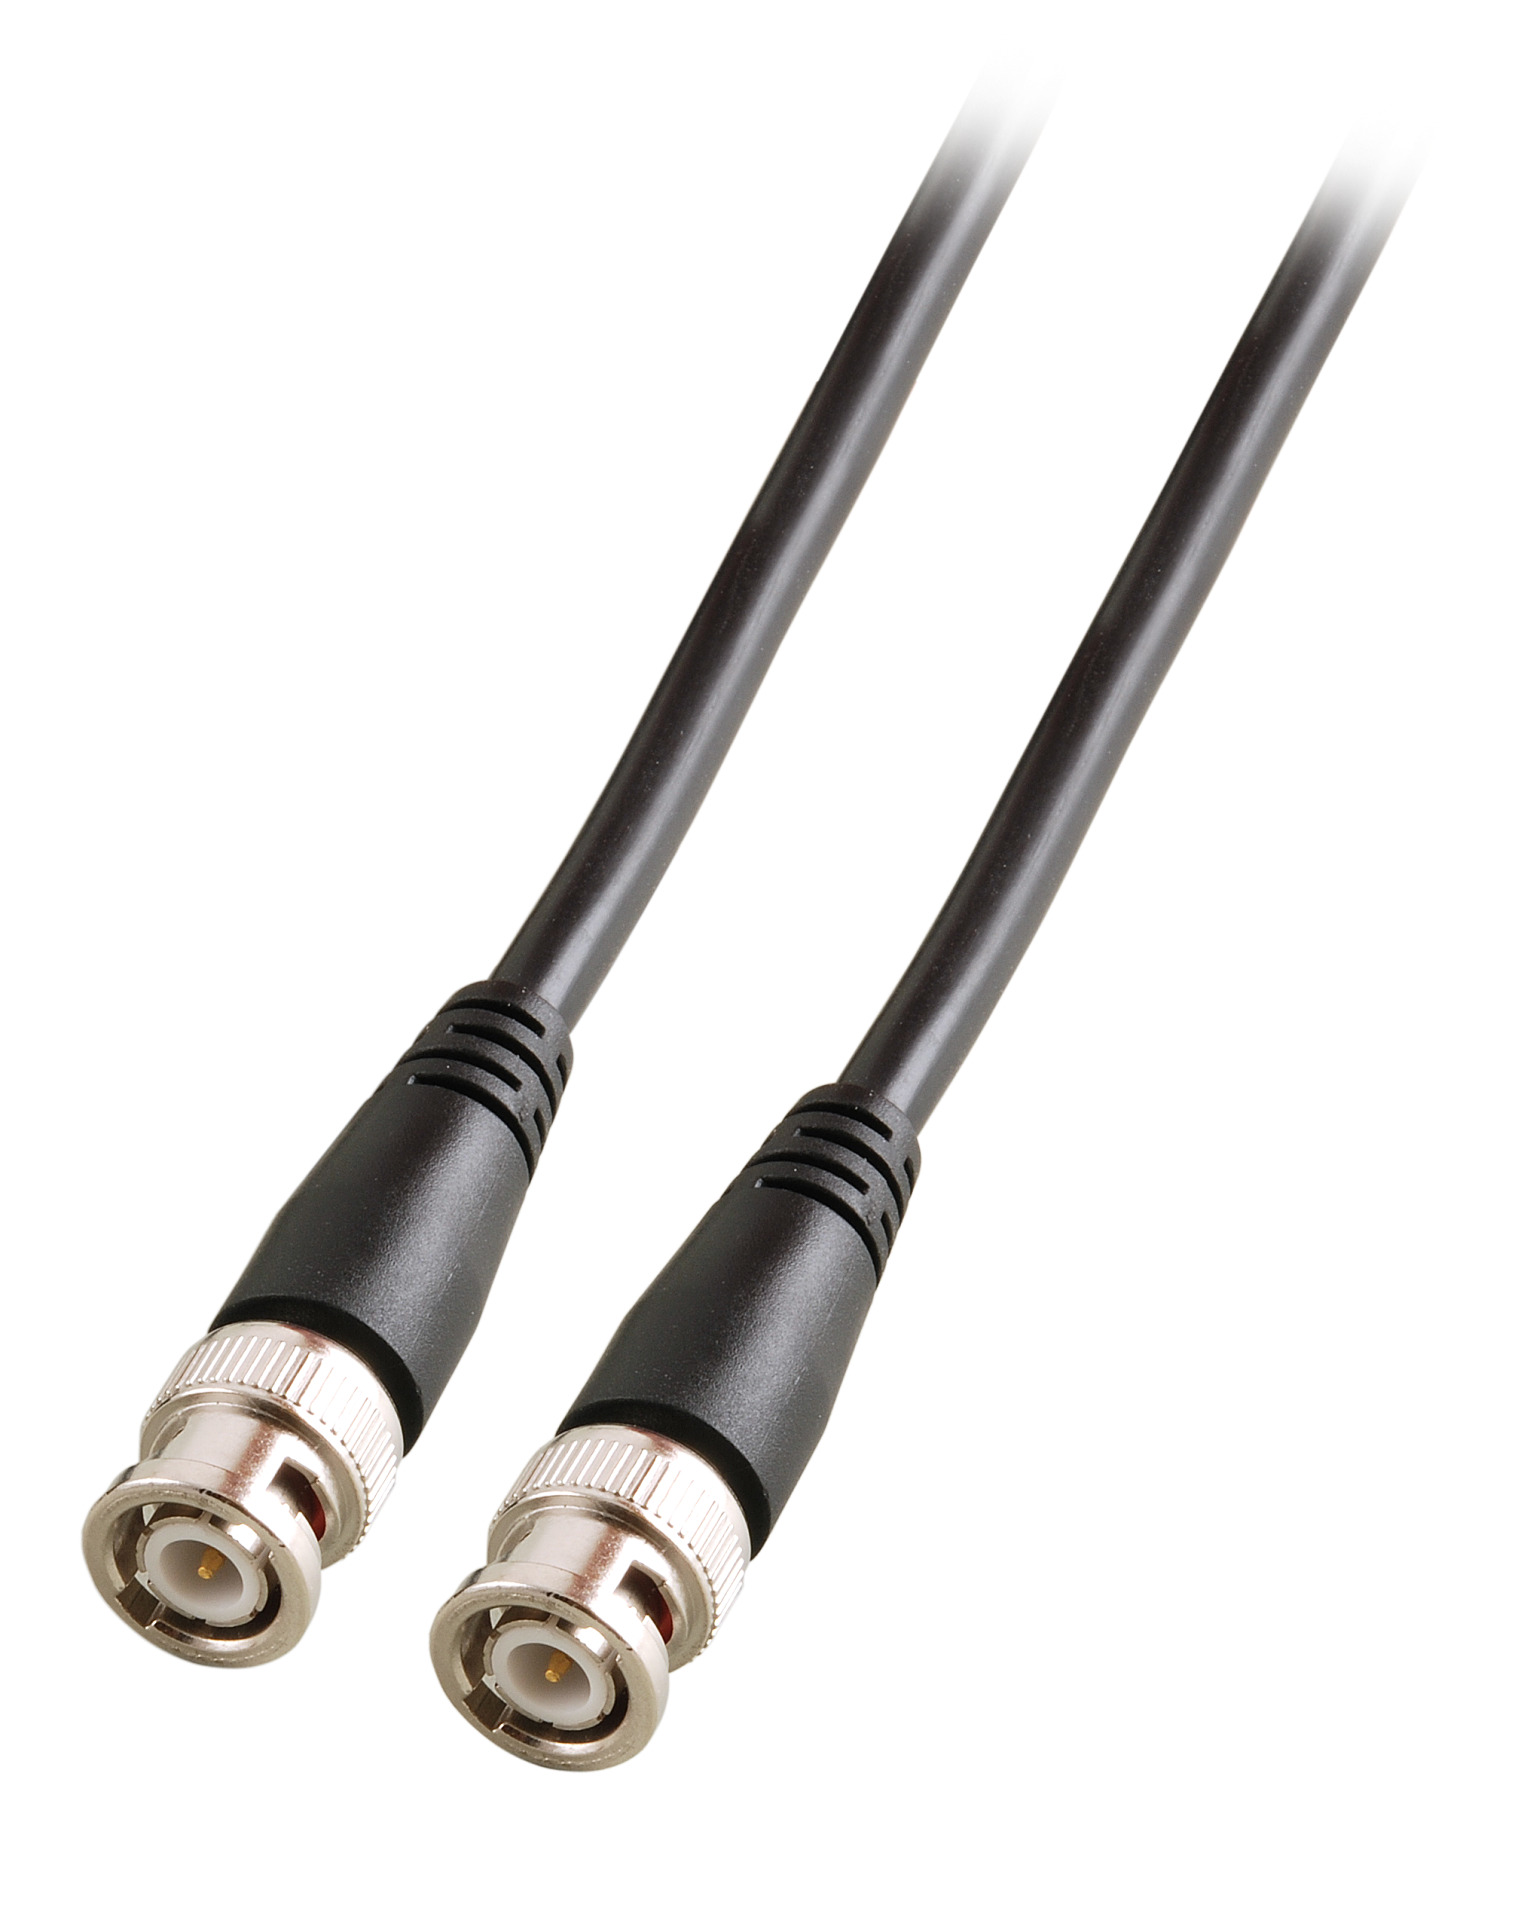 Coaxial cable RG59 B/U 75 Ohm, 2 x straight plugs, 2.0m